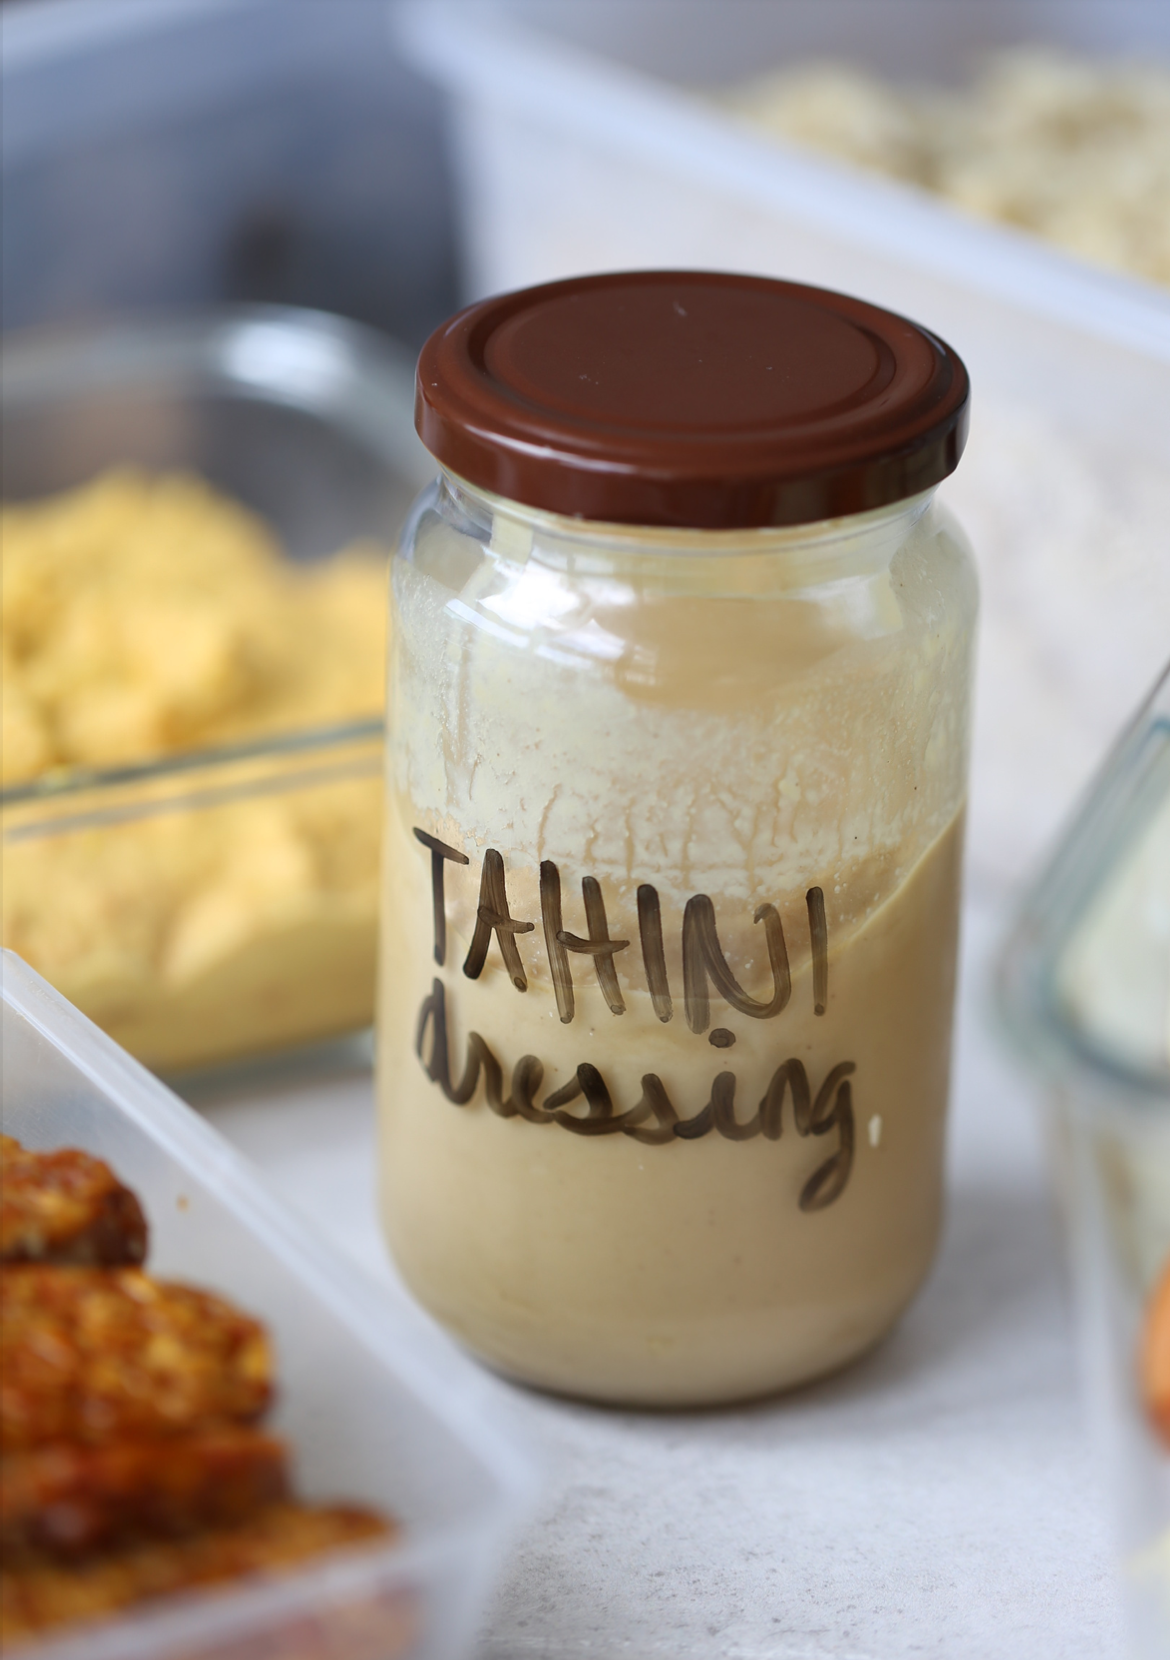 Tahini soy dressing, or Crack Sauce, in a jar